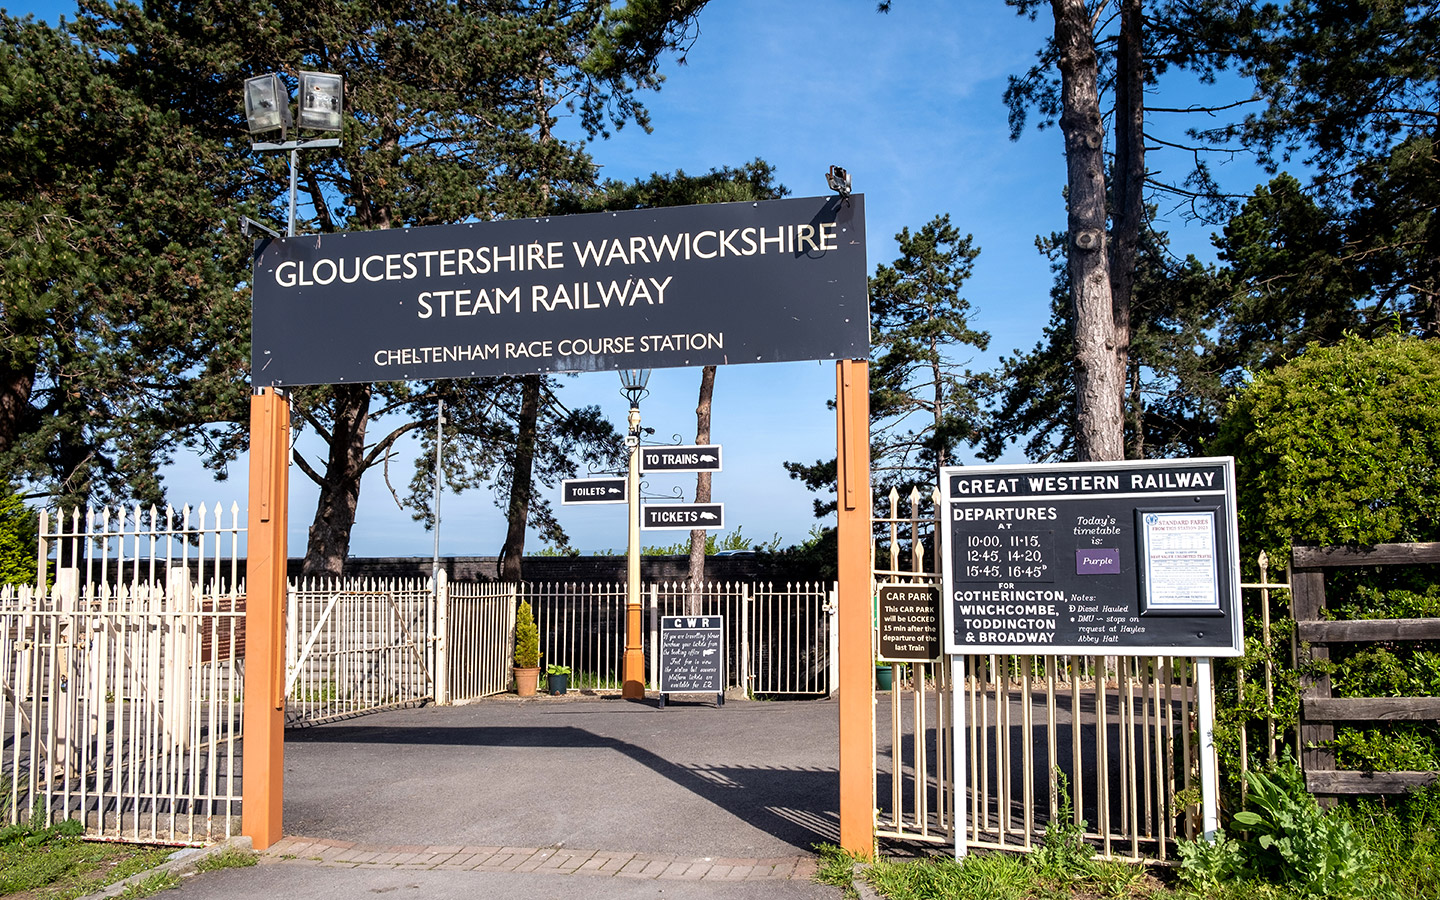 Cheltenham Race Course station – start of the Gloucestershire-Warwickshire Steam Railway